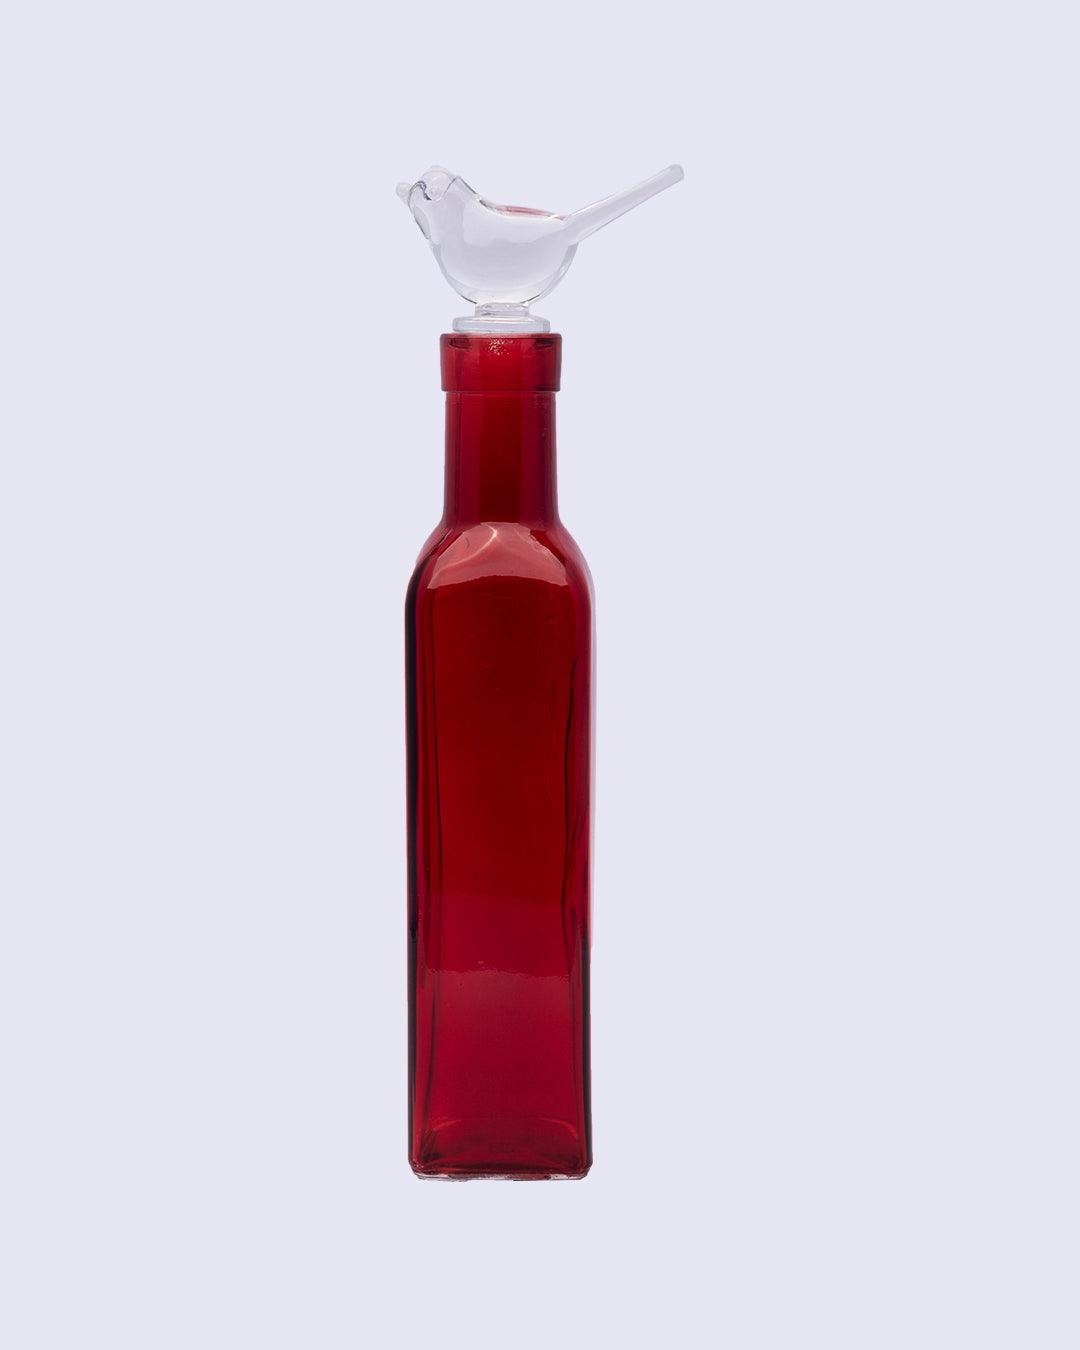 Oil Dispenser, for Cooking, Red, Glass, 300 mL - MARKET 99